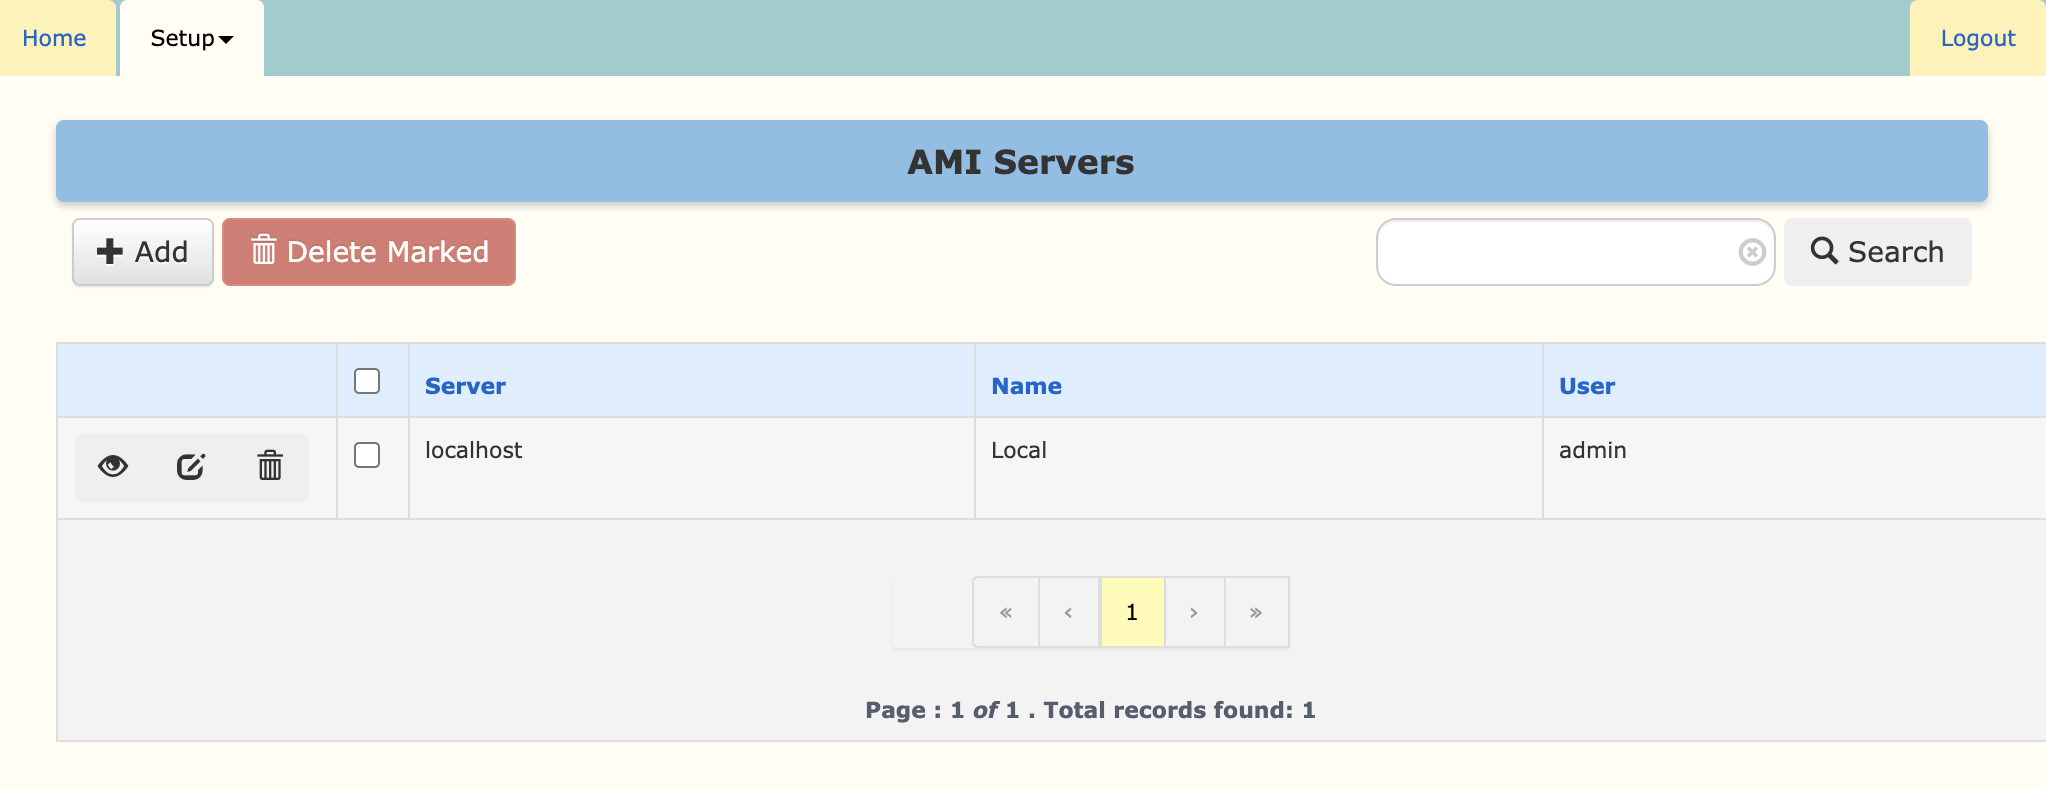 Ami server list image